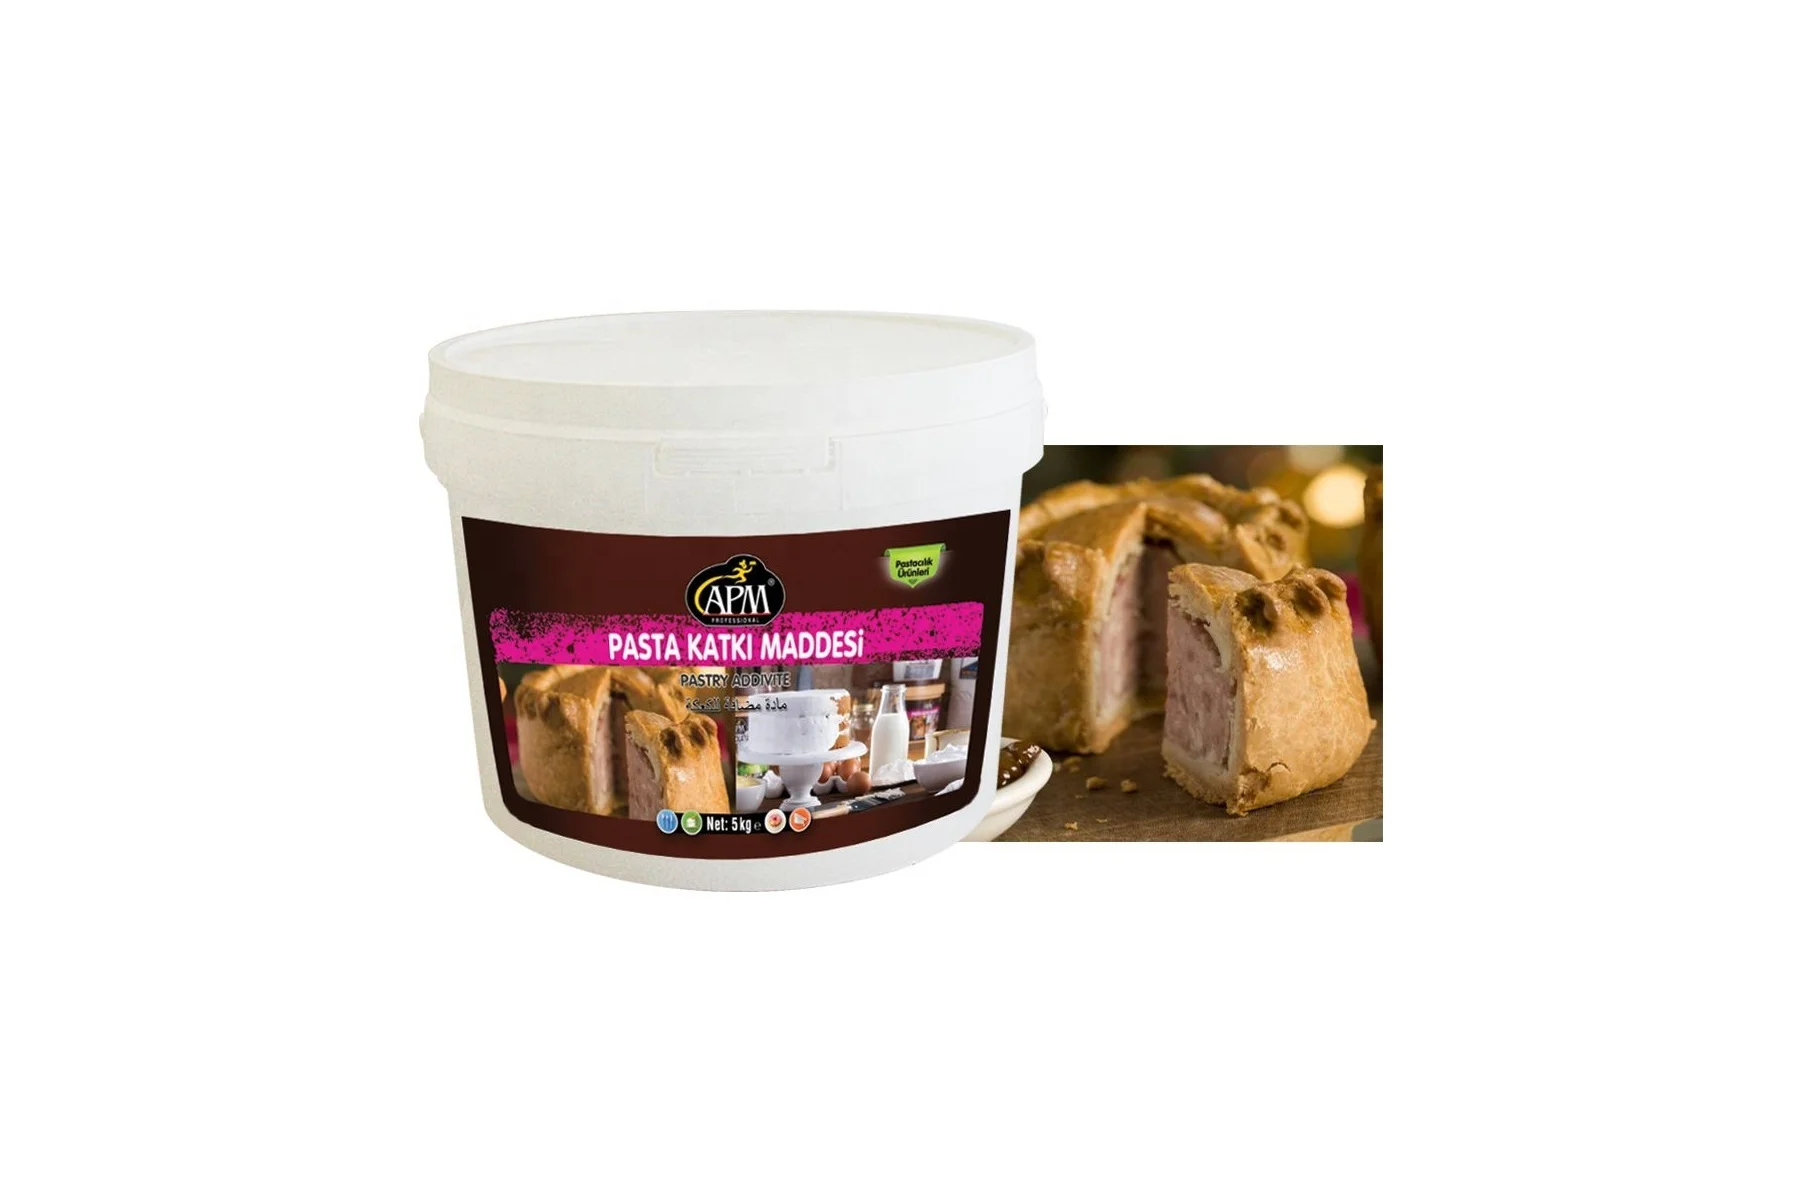 APM Cake Gel Emulsifier, Pastry Additive For Pastry Industry